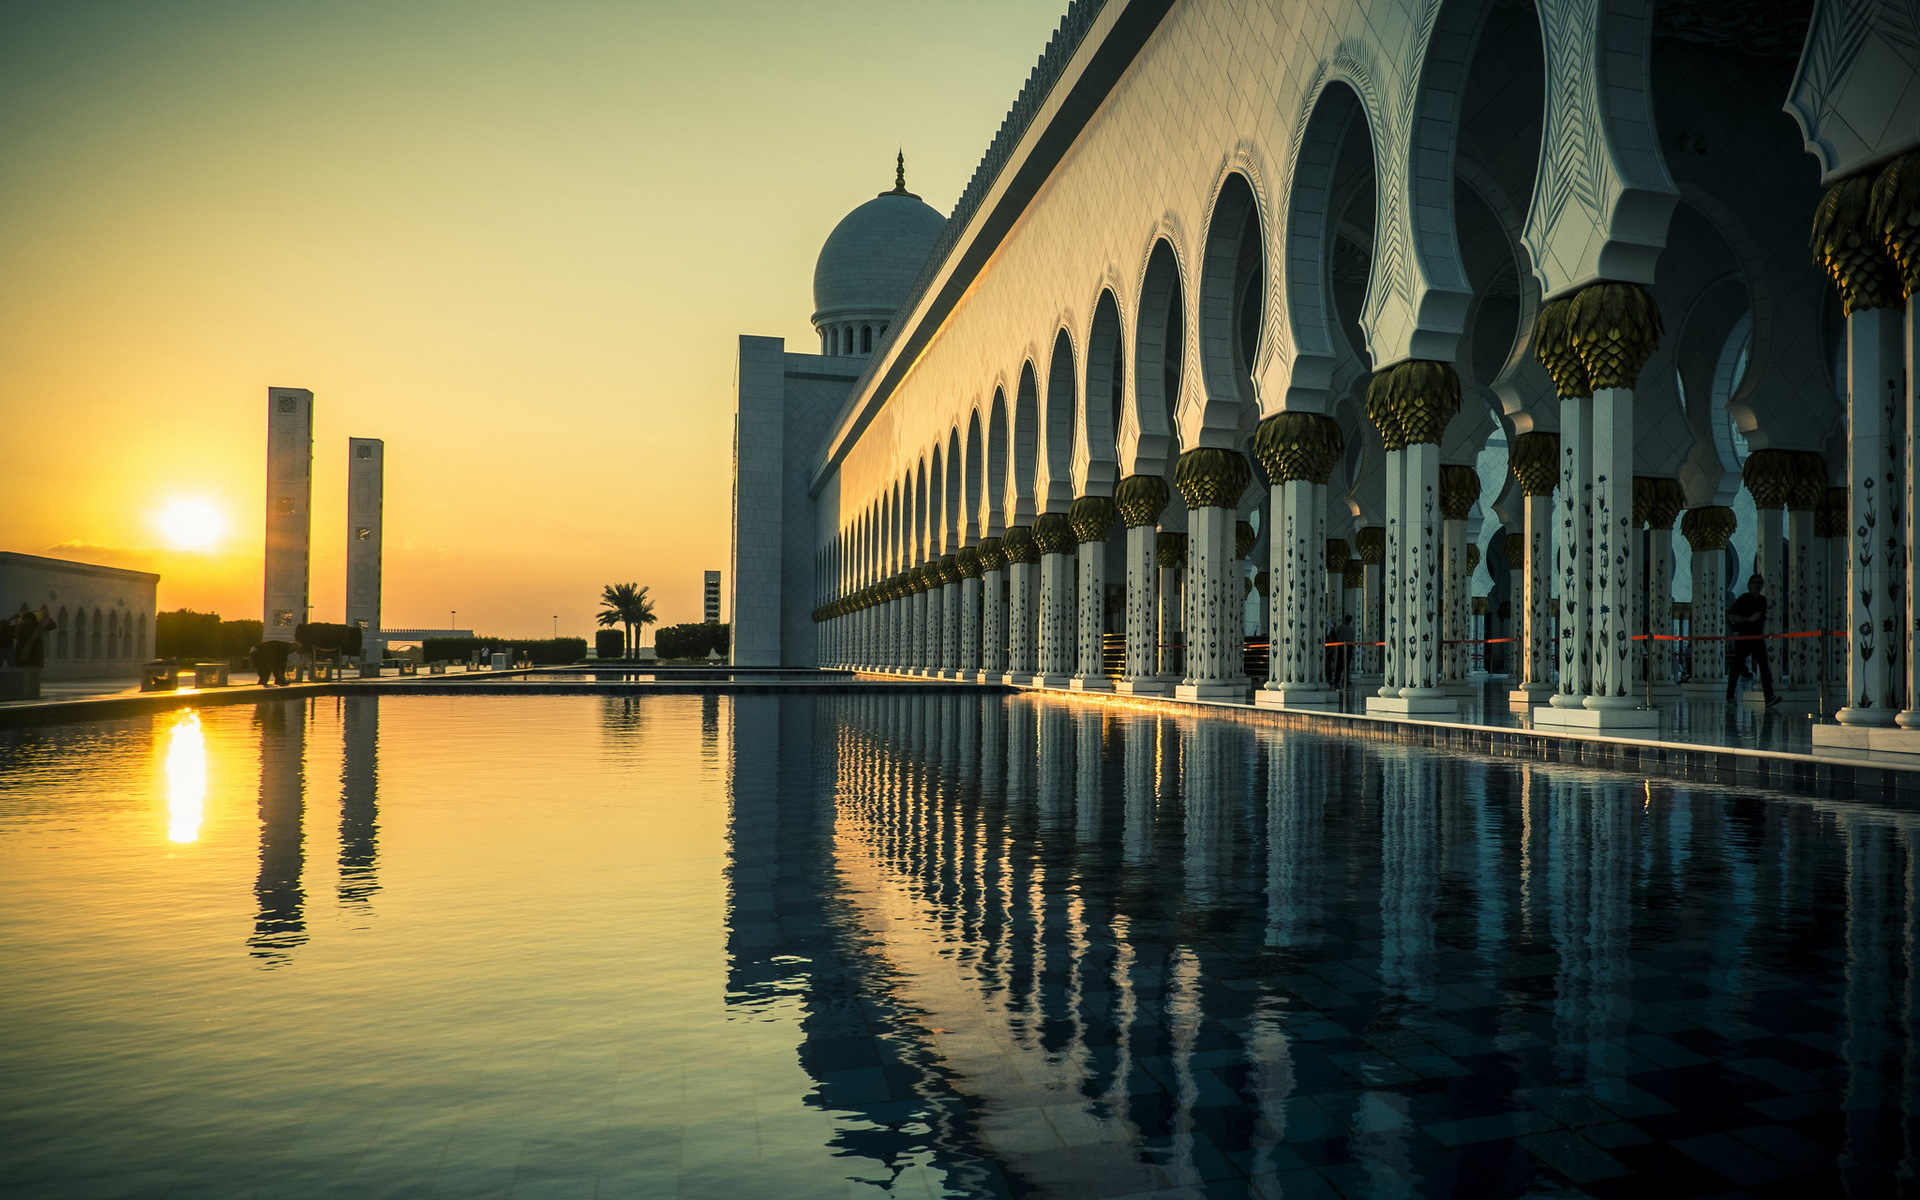 Religious Sheikh Zayed Grand Mosque 1920x1200